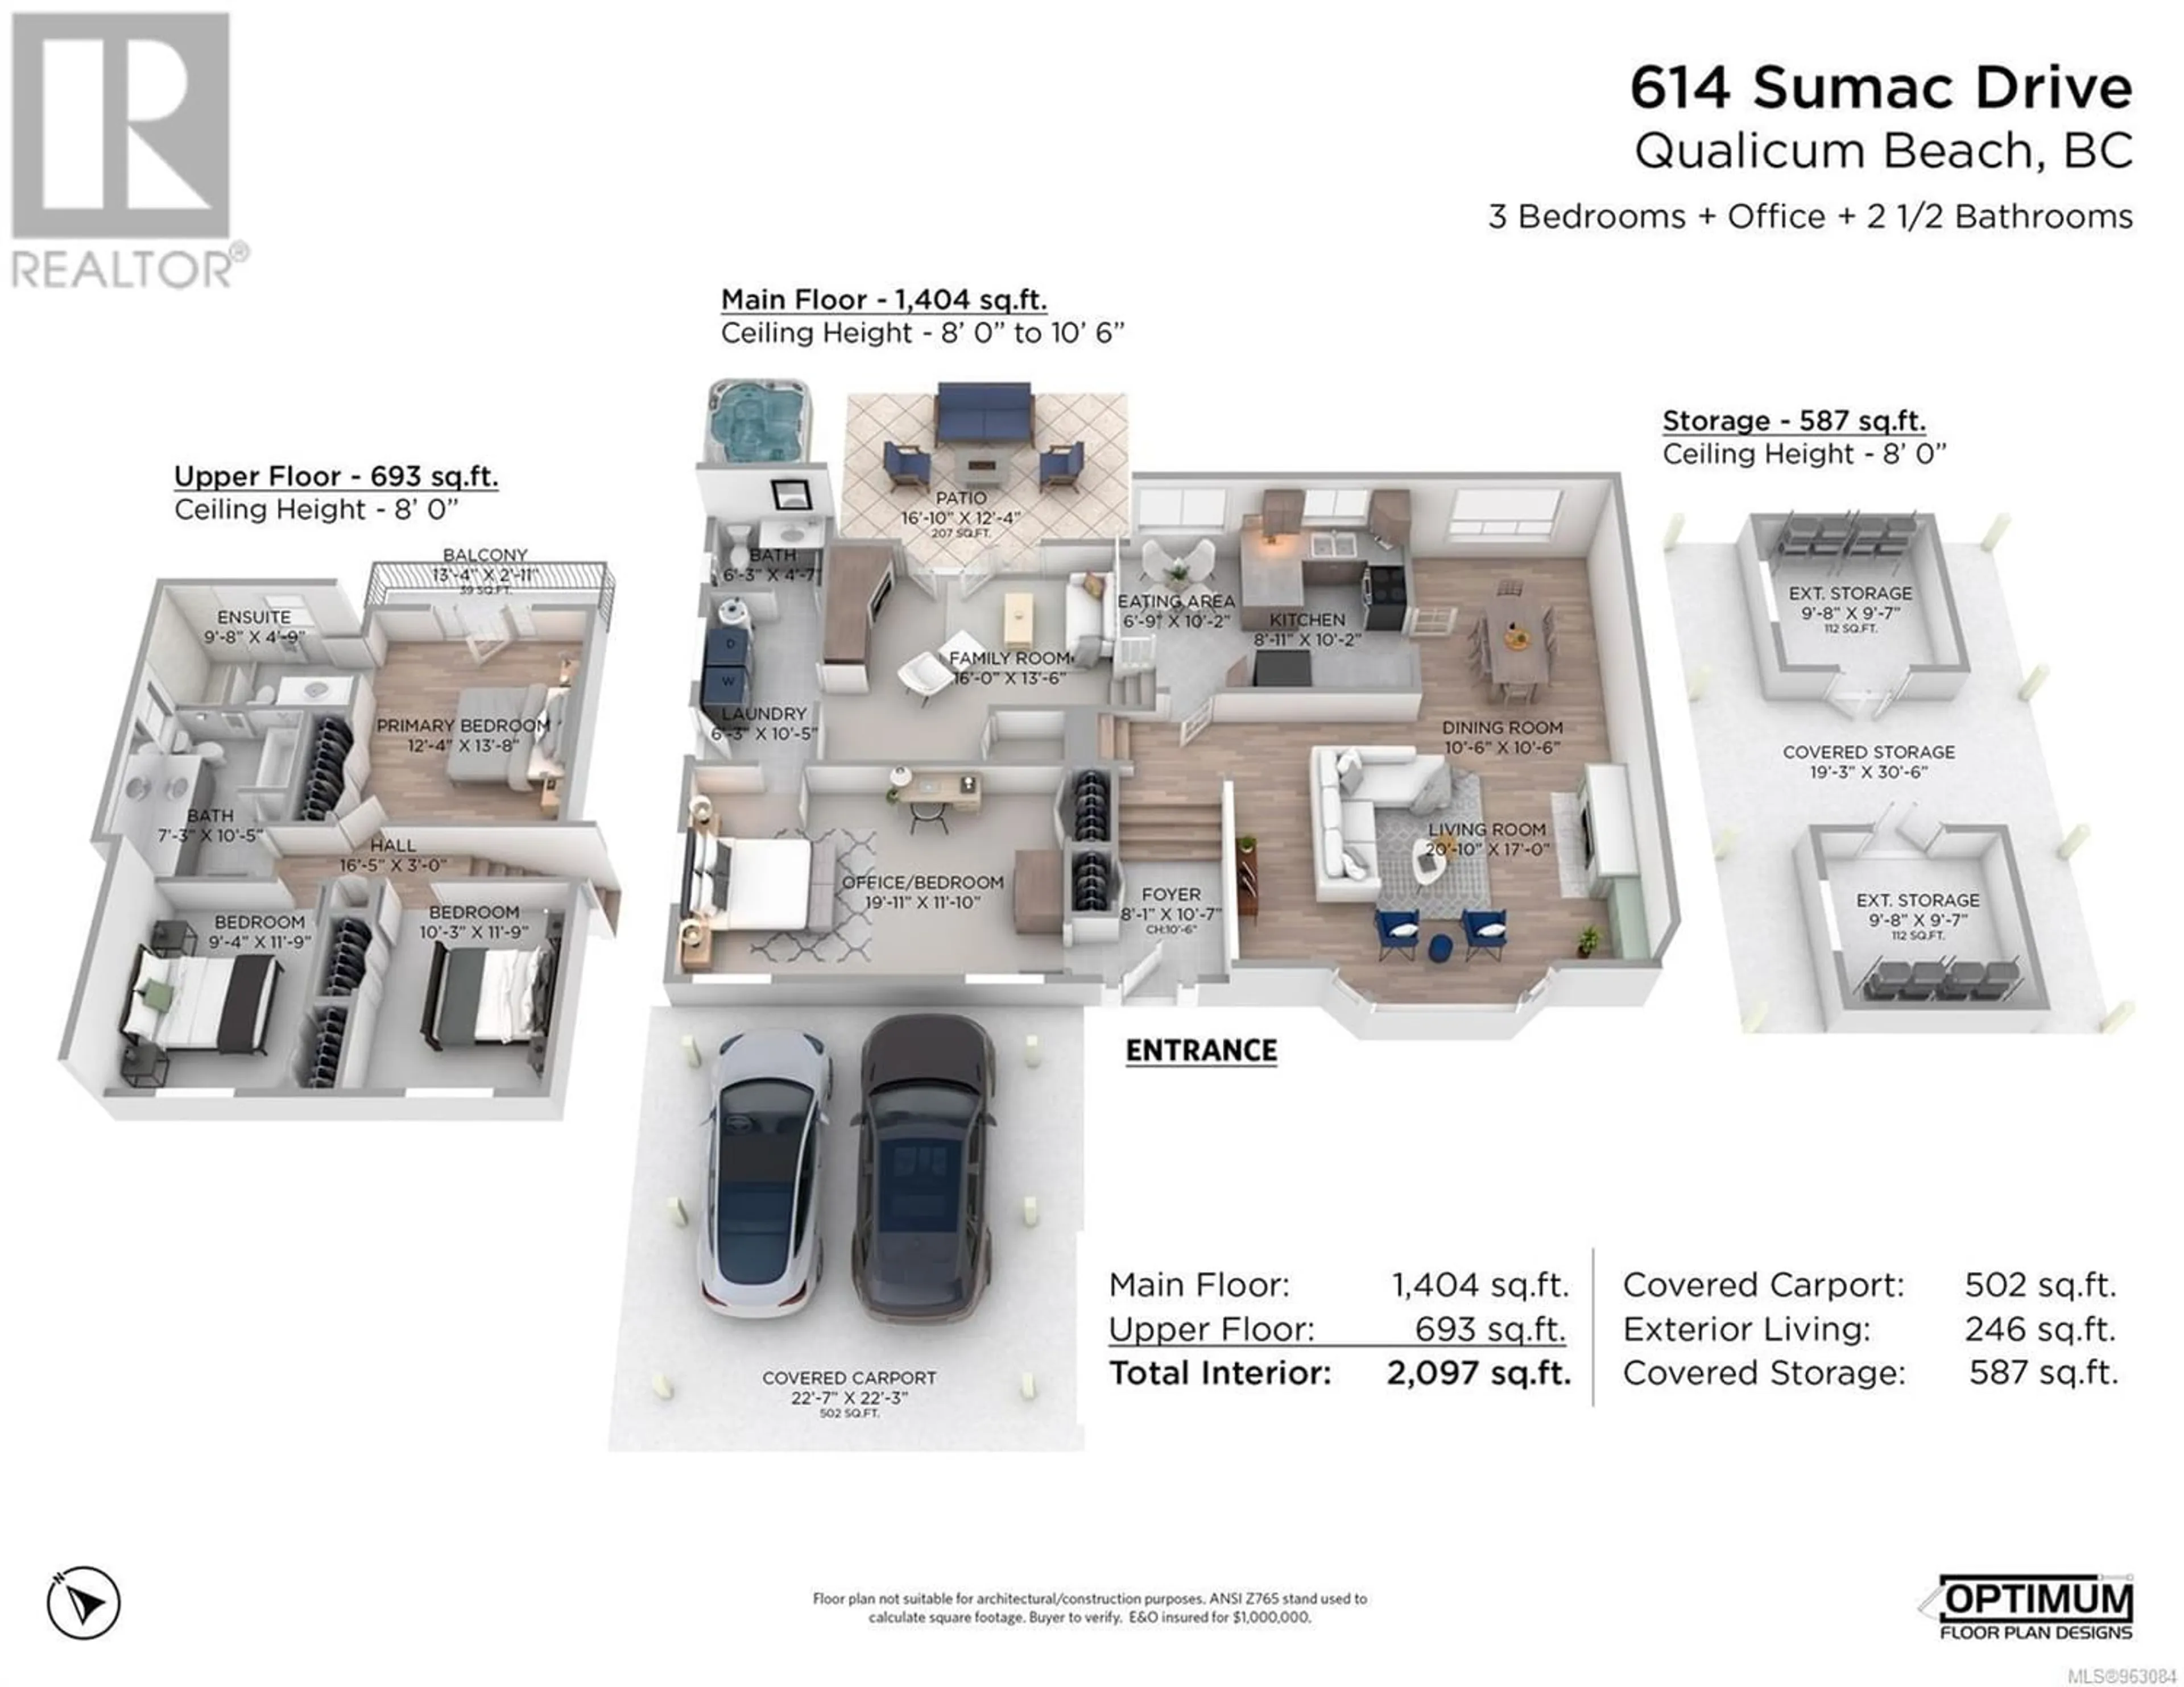 Floor plan for 614 Sumac Dr, Qualicum Beach British Columbia V9K1A8